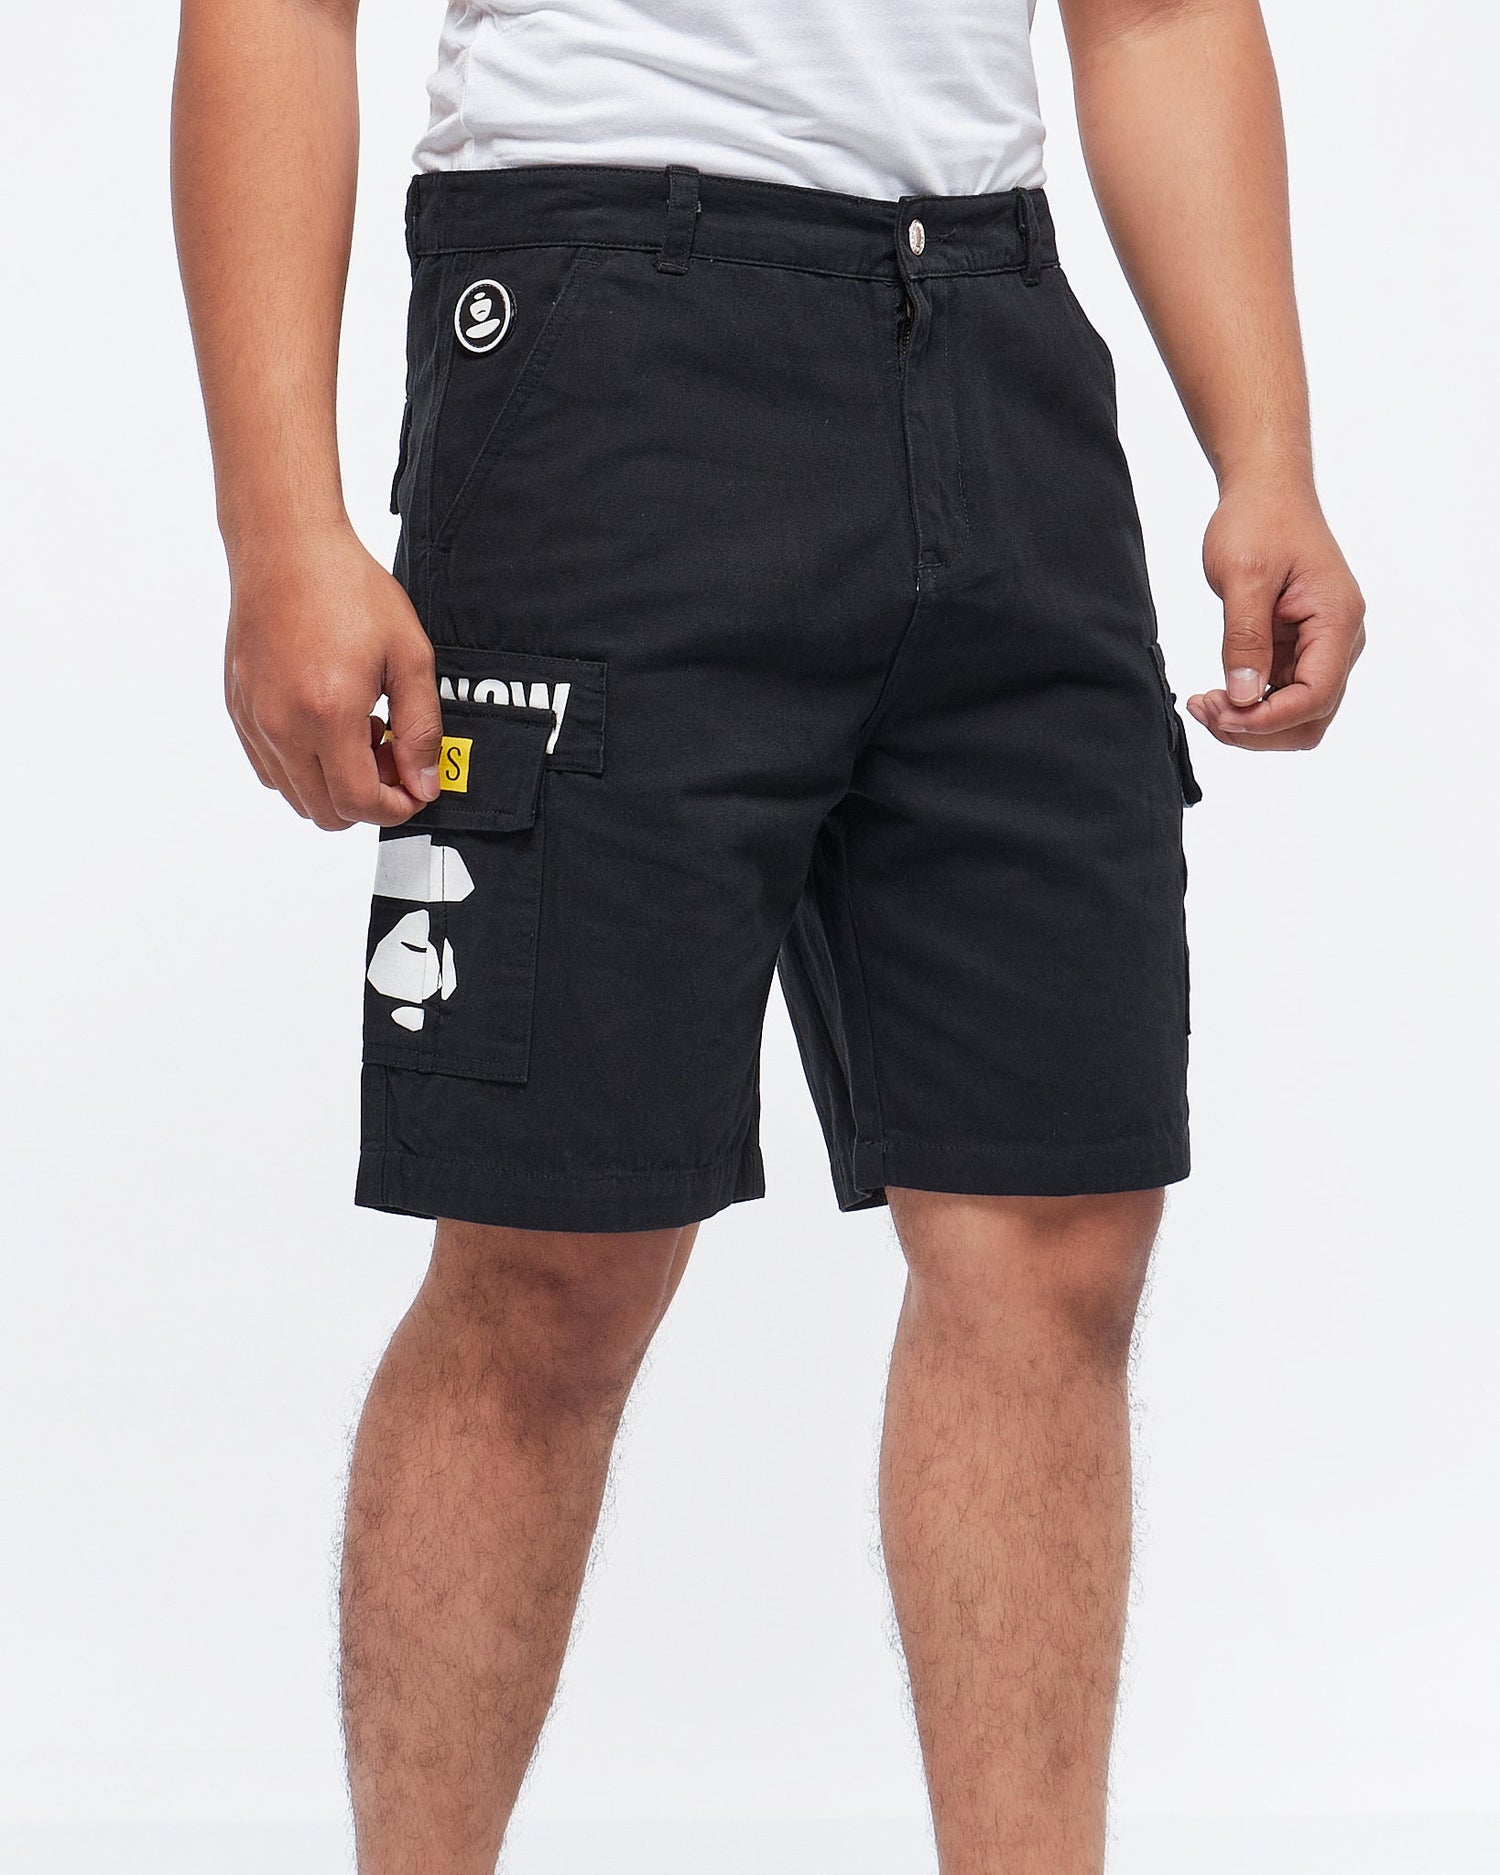 MOI OUTFIT-Side Pocket Men Shorts 29.90